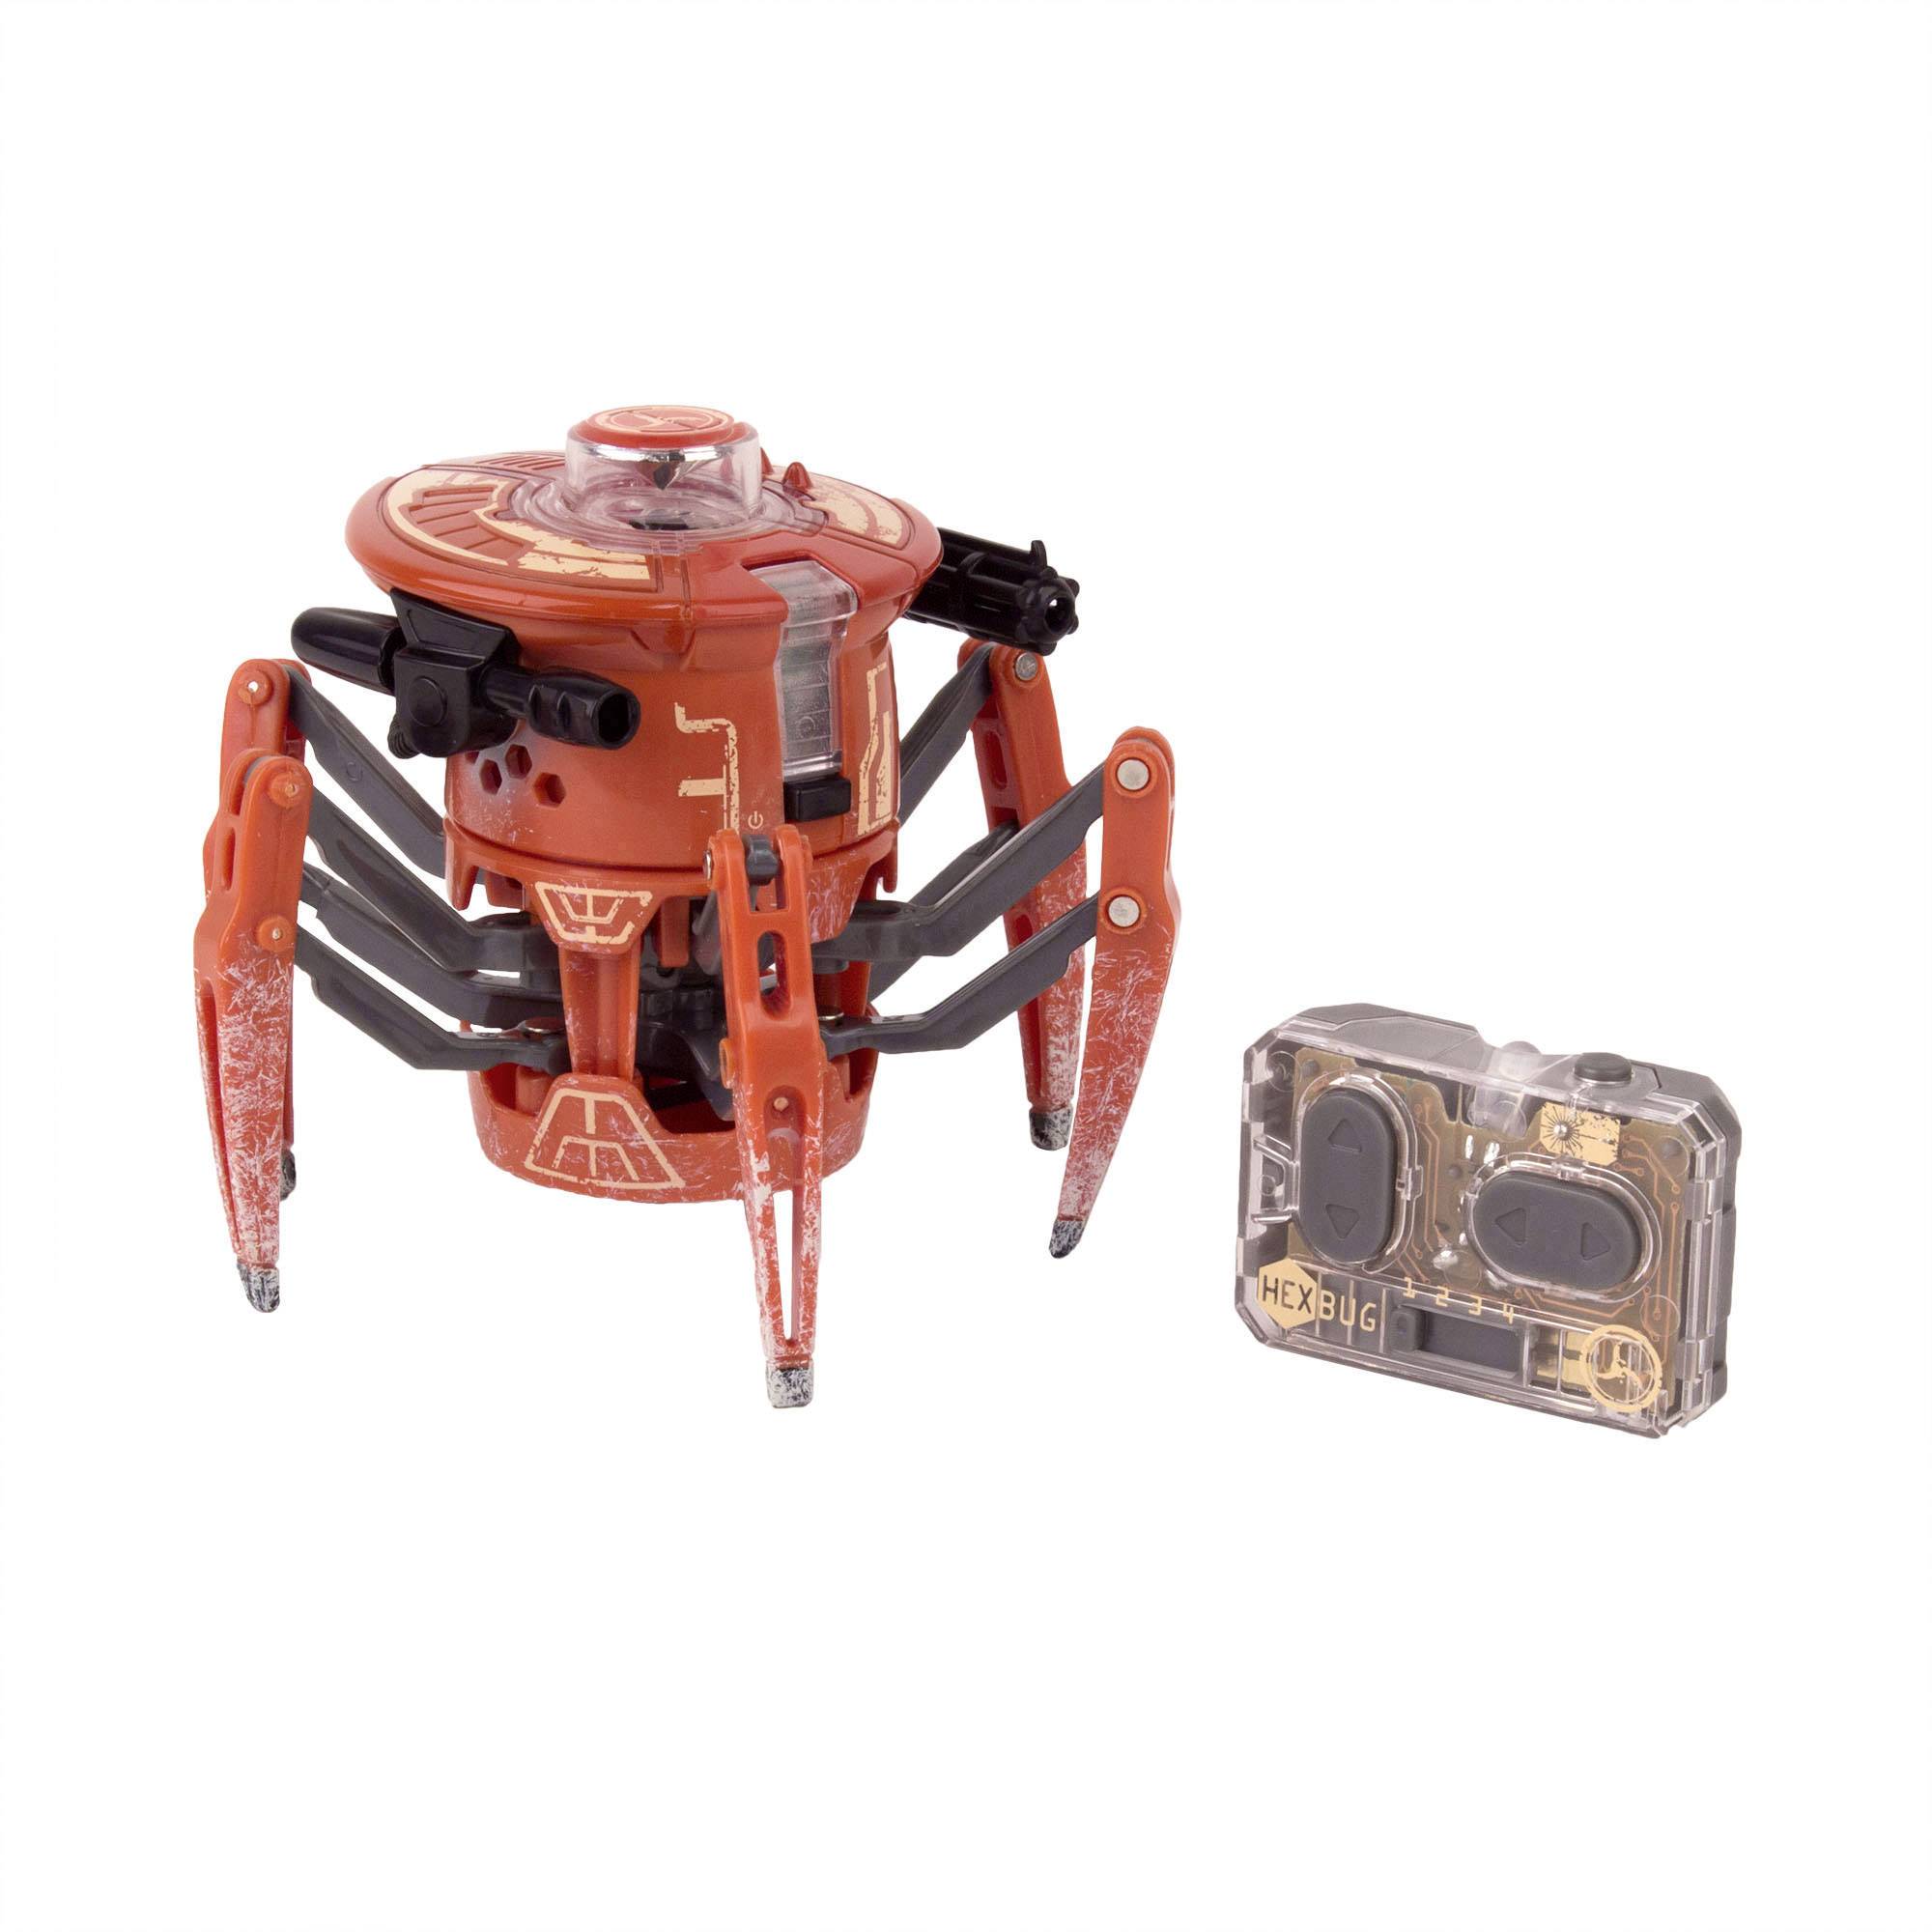 Камера спайдер 2.0. Робот Hexbug набор Battle Spider 2. Робот Hexbug Spider. Hexbug Battle Spider. Hexbug Spider XL.